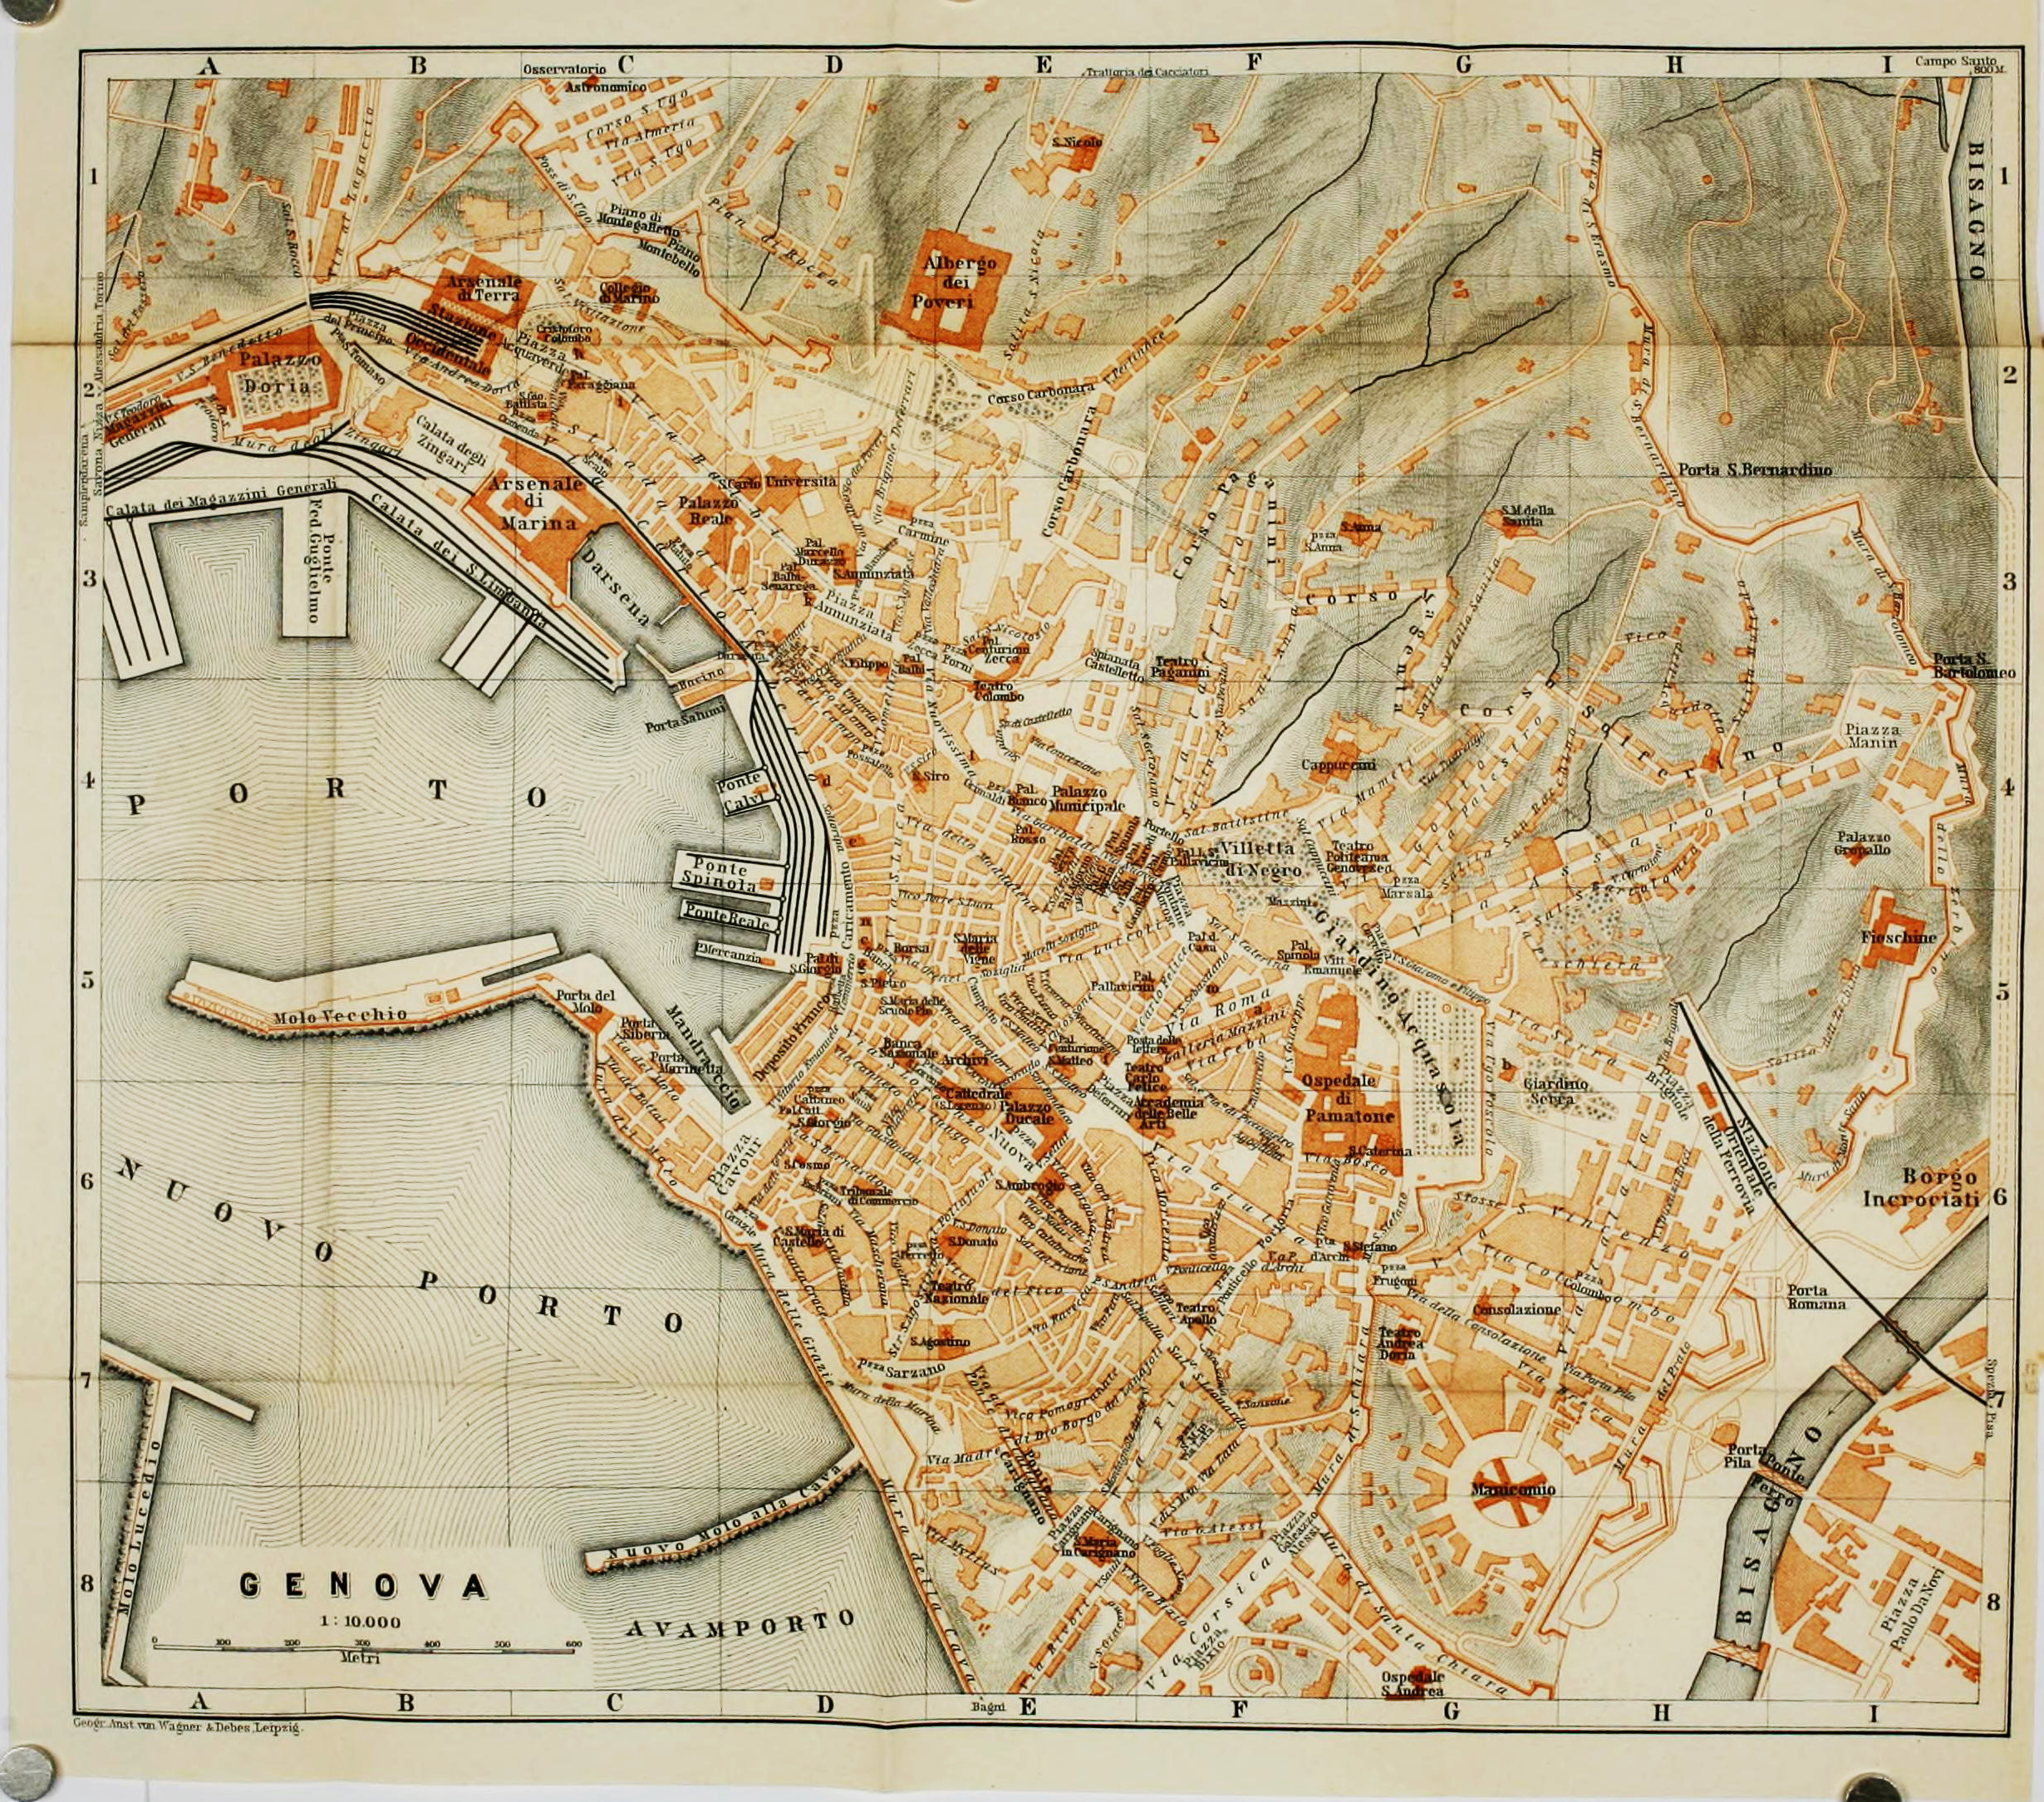 Genoa 1886 - Italy handbook for travellers